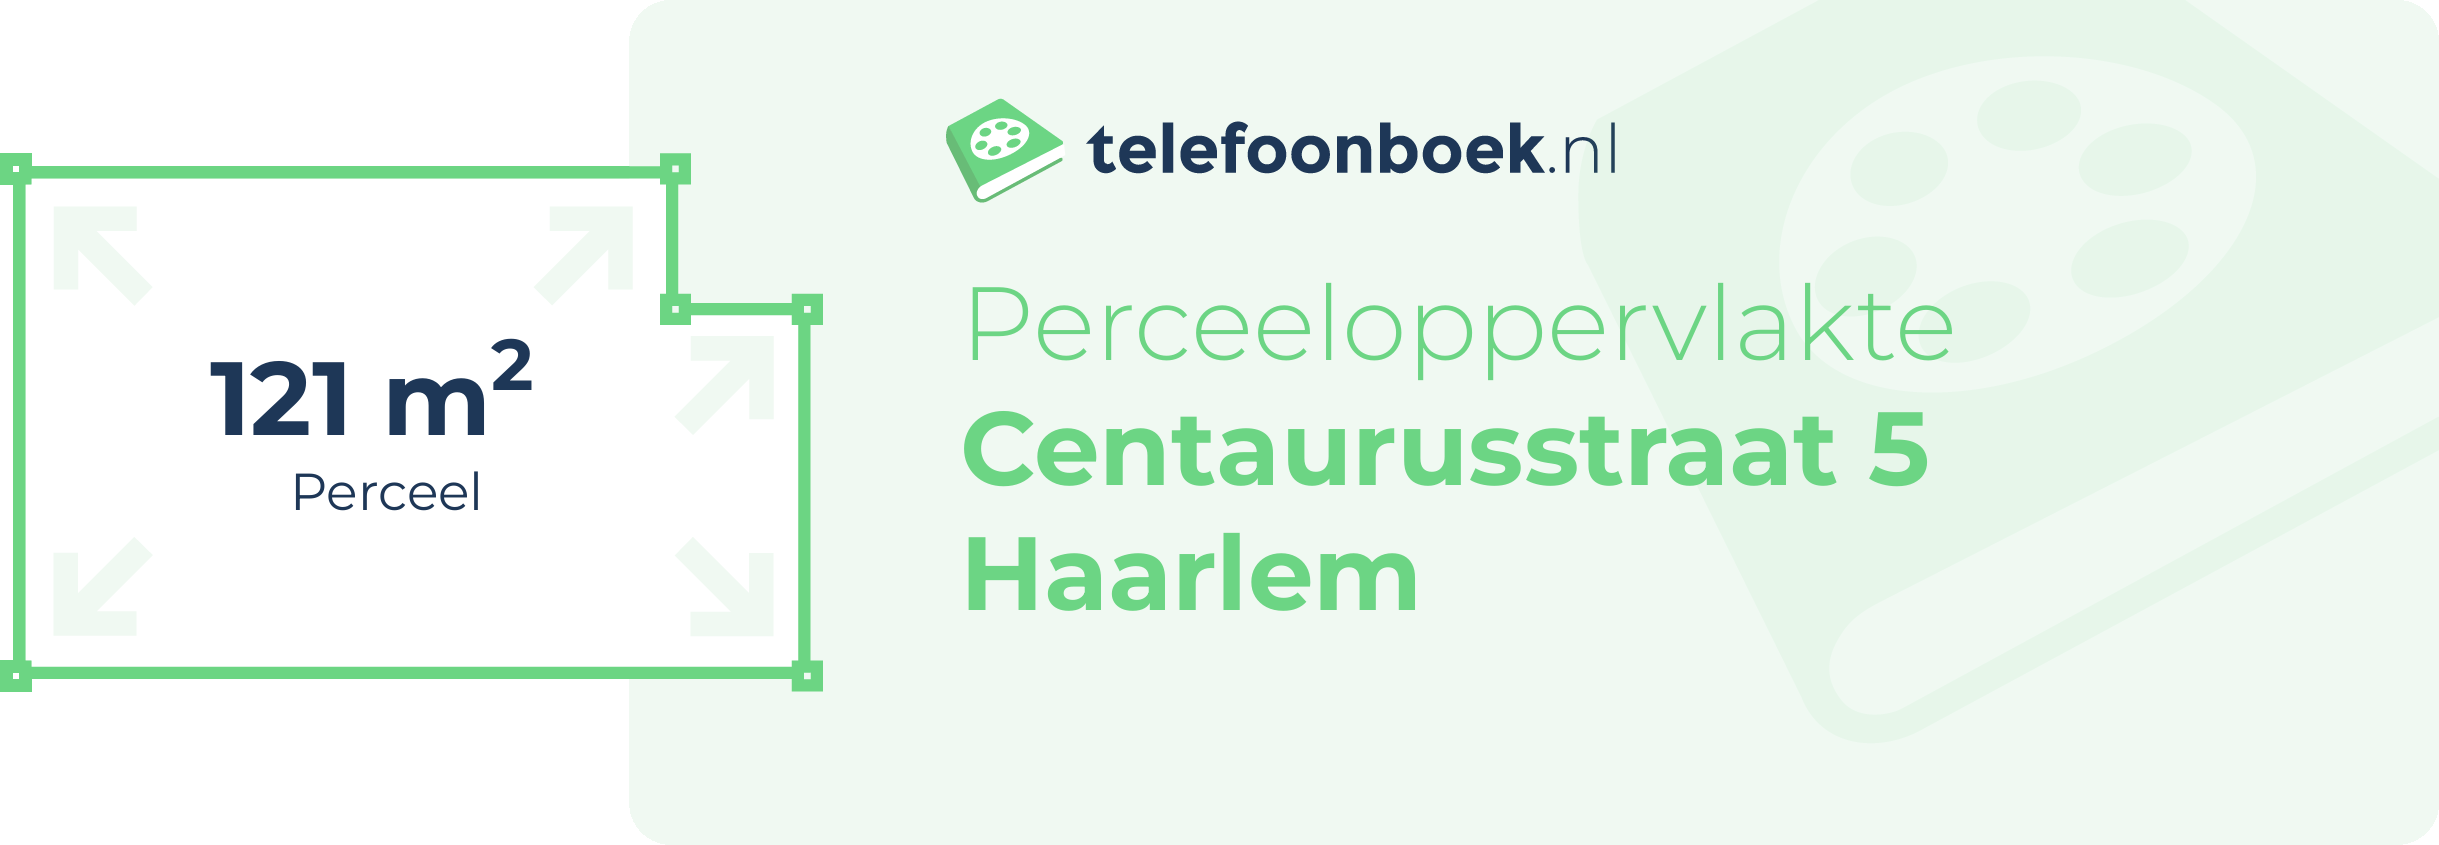 Perceeloppervlakte Centaurusstraat 5 Haarlem